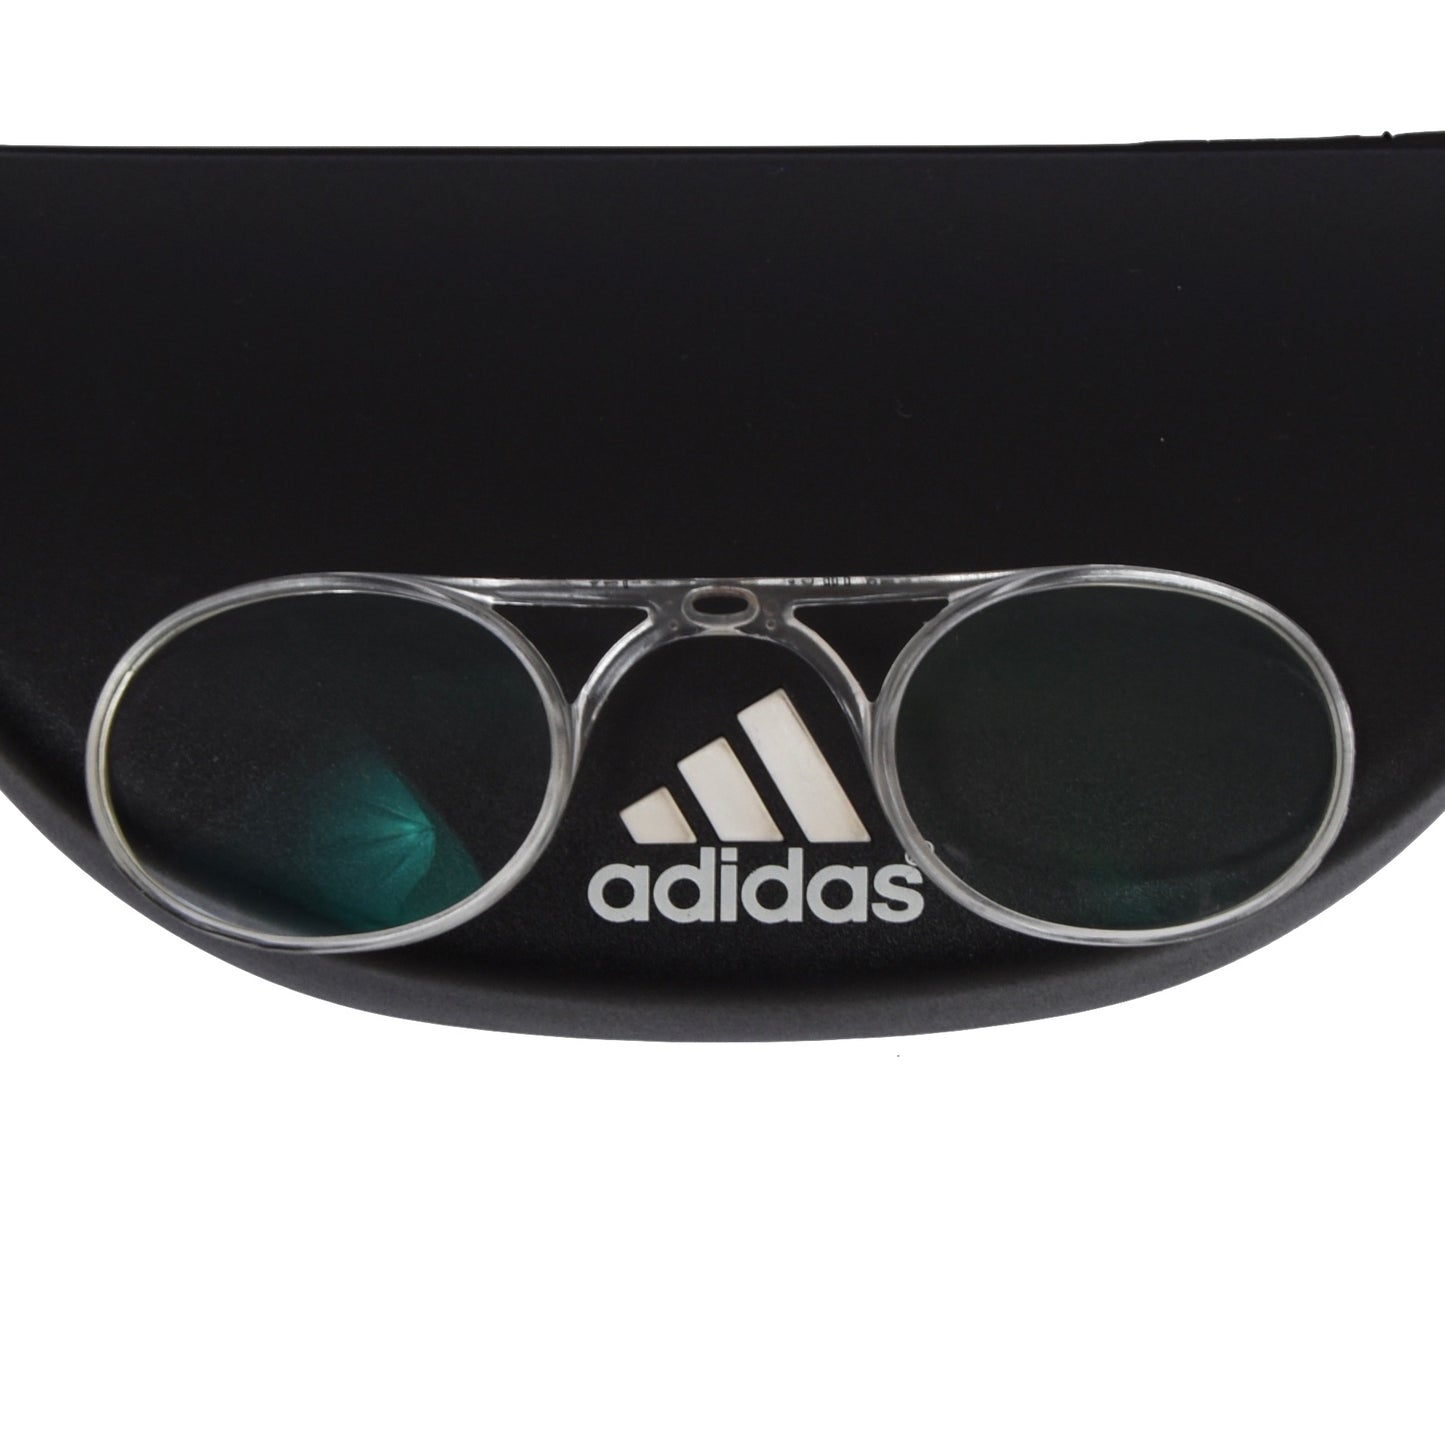 Adidas A168 6053 Evil Eye Halfrim Pro Sunglasses - White